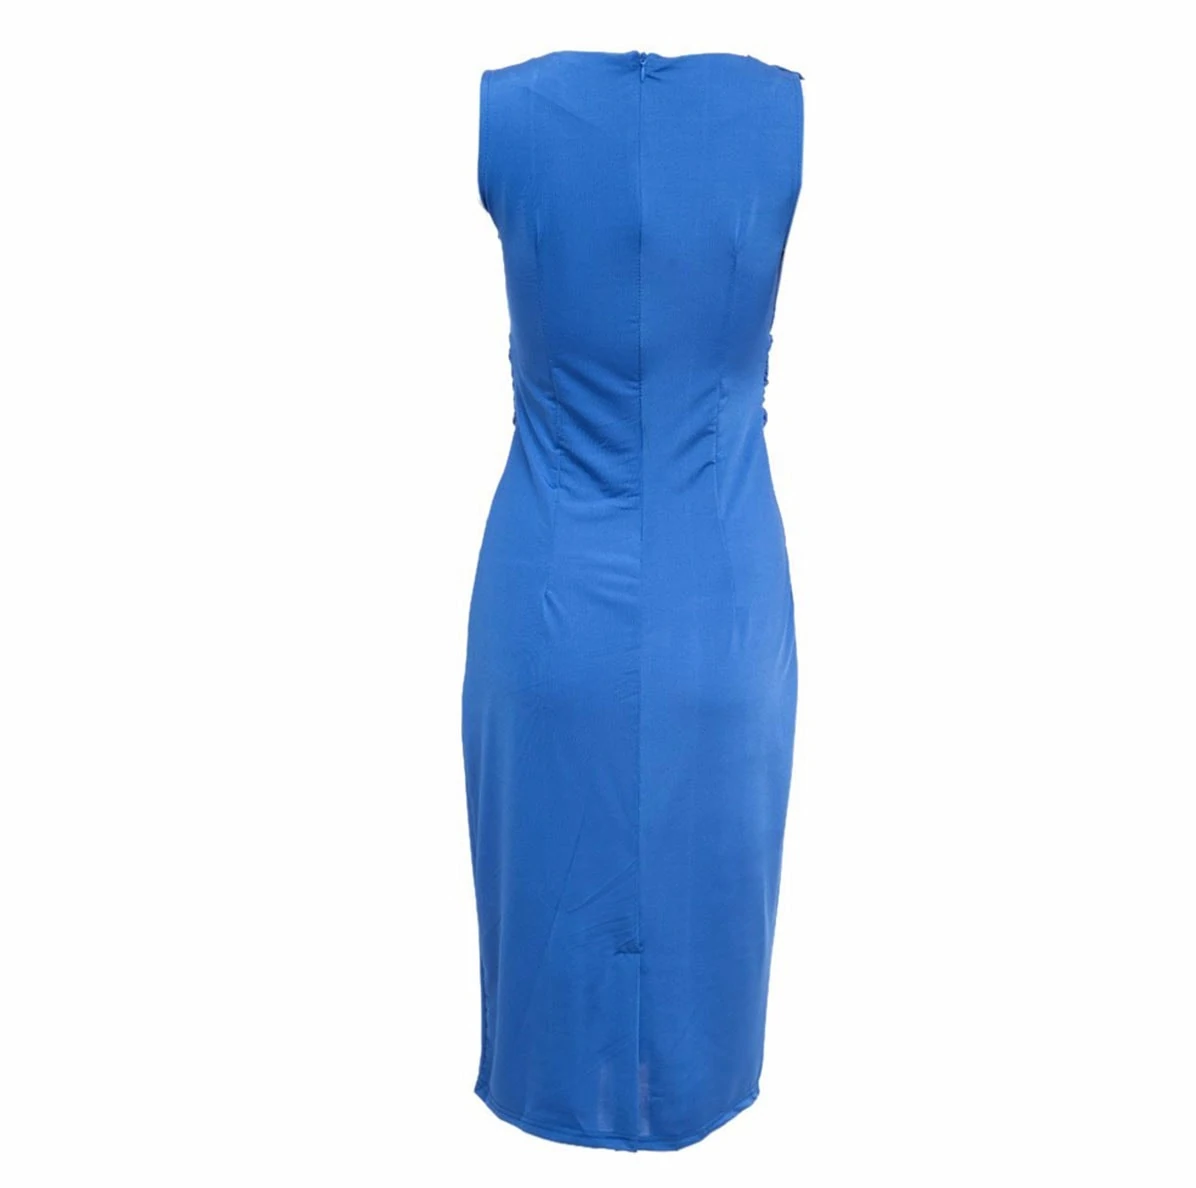 M0188 blue3 Short Sleeve Dresses maureens.com boutique